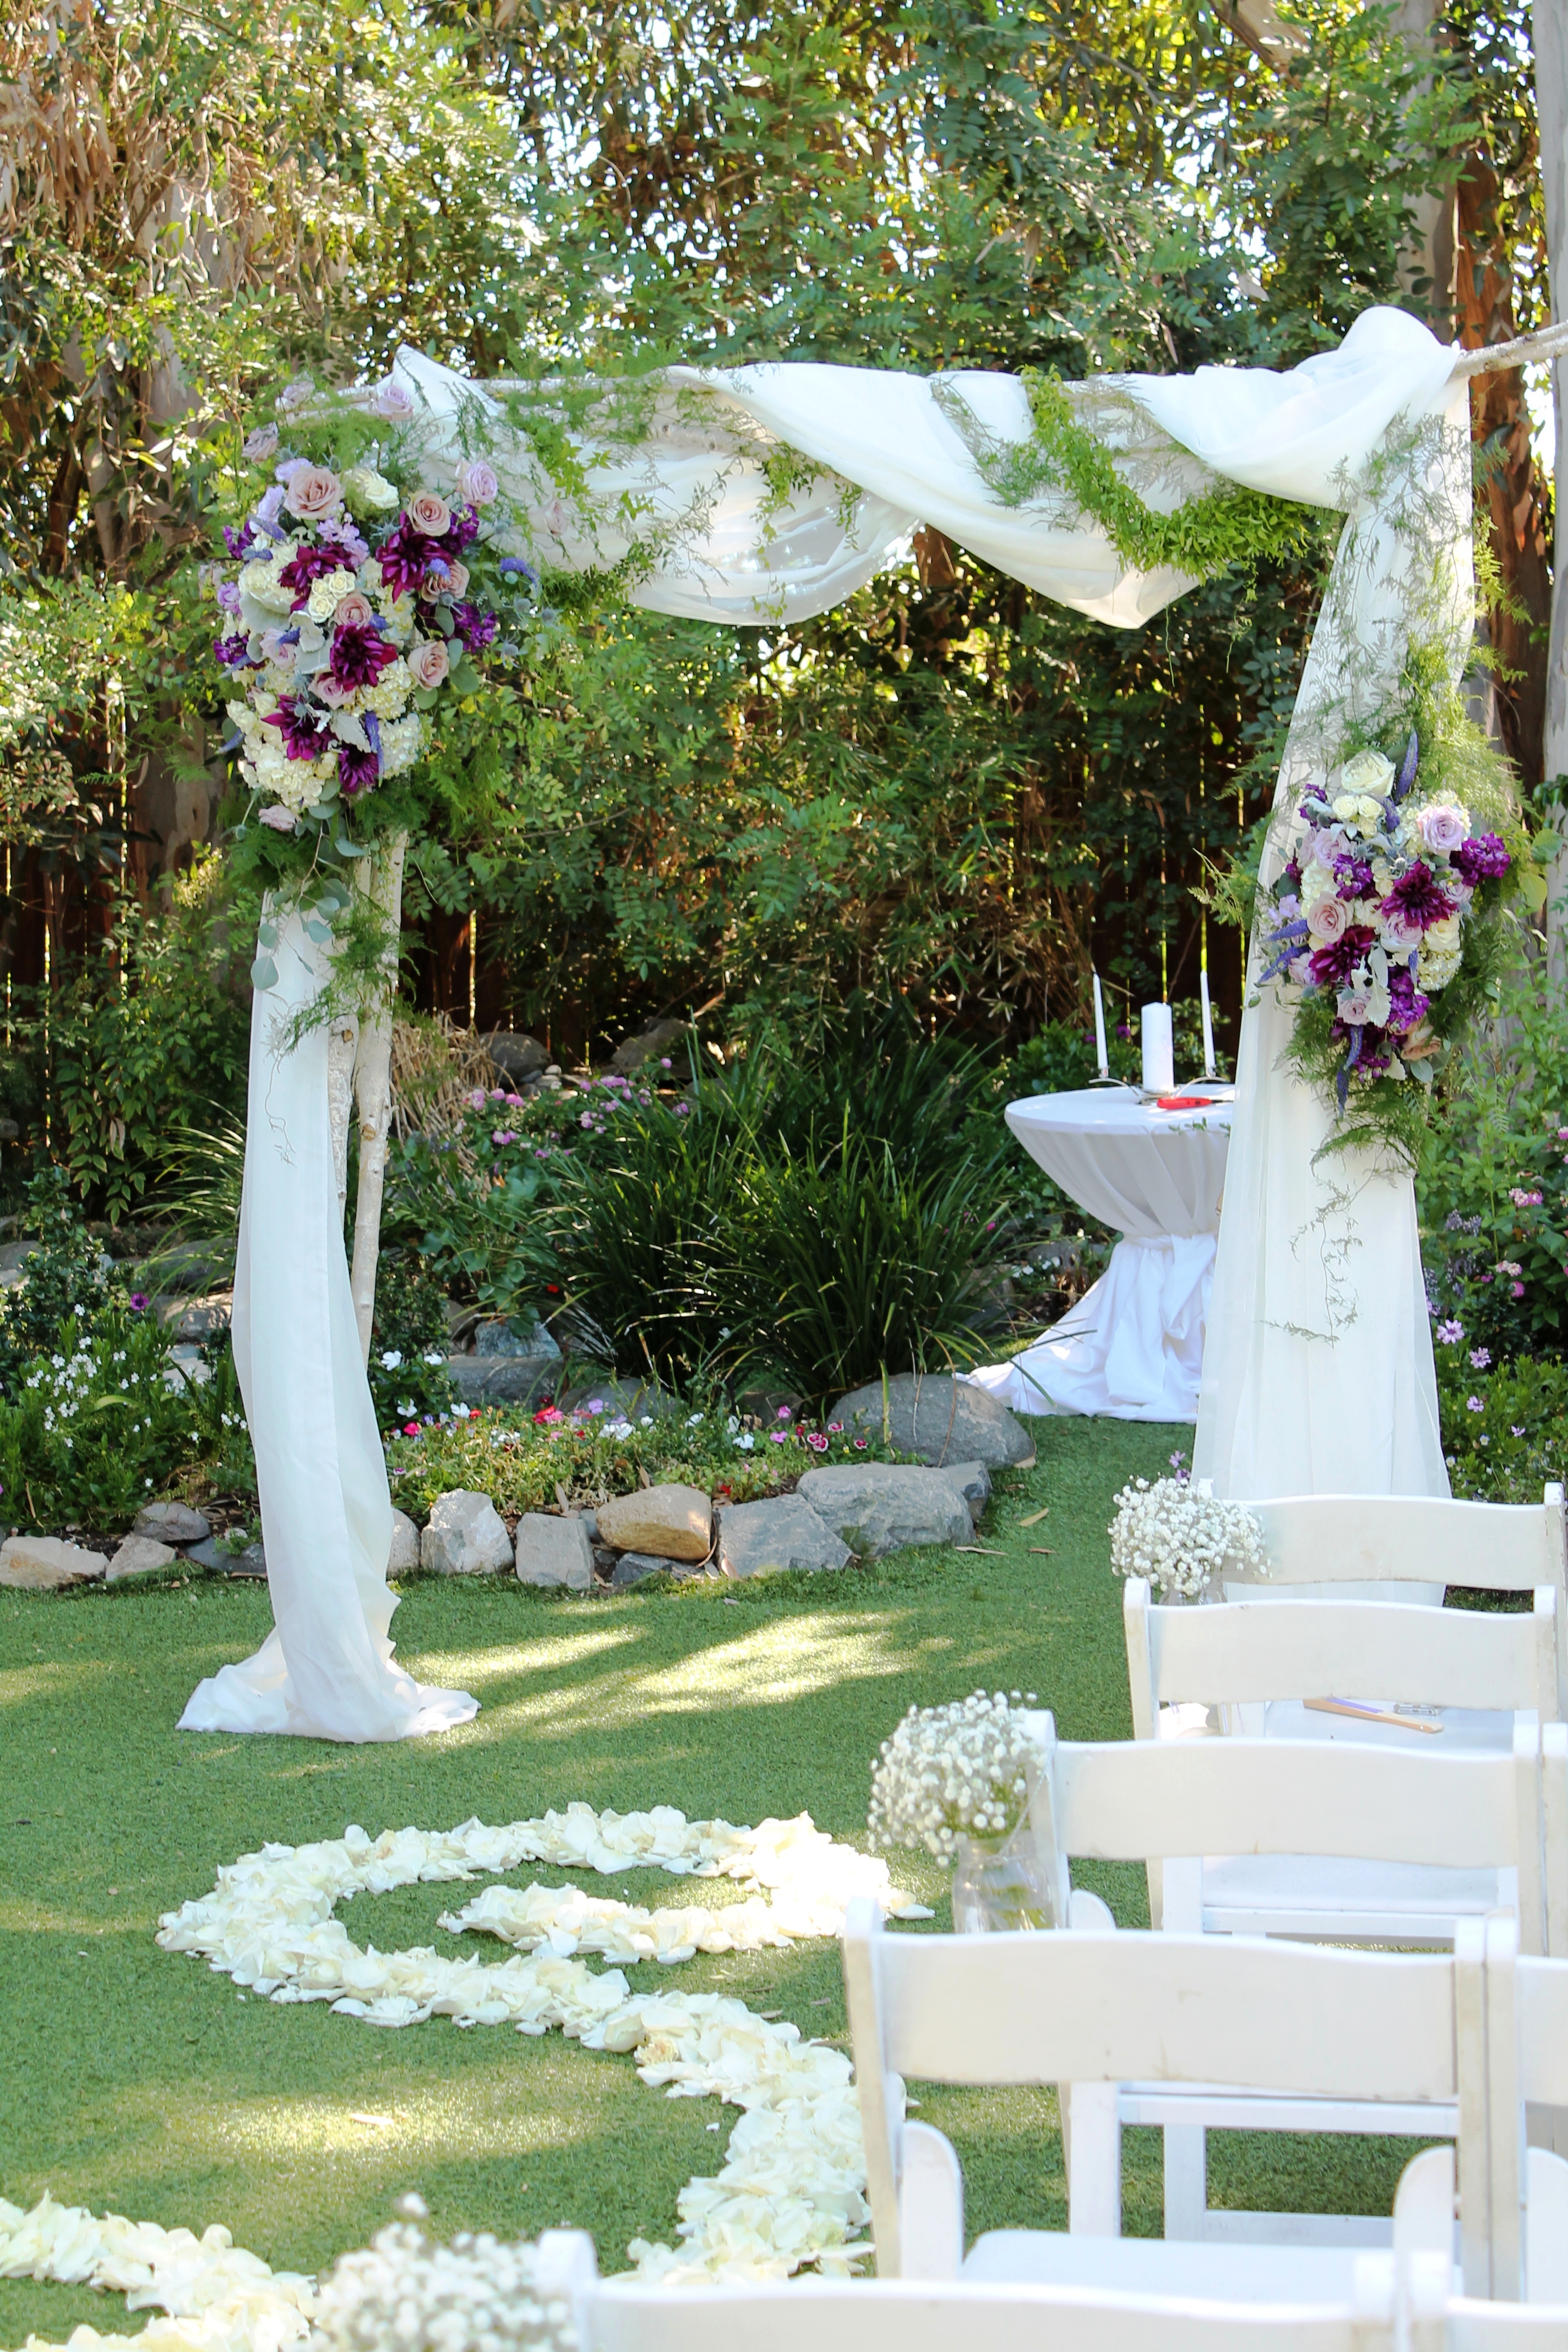 Birch Arch - Wedding & Party Rentals and Sales in San Diego, CA